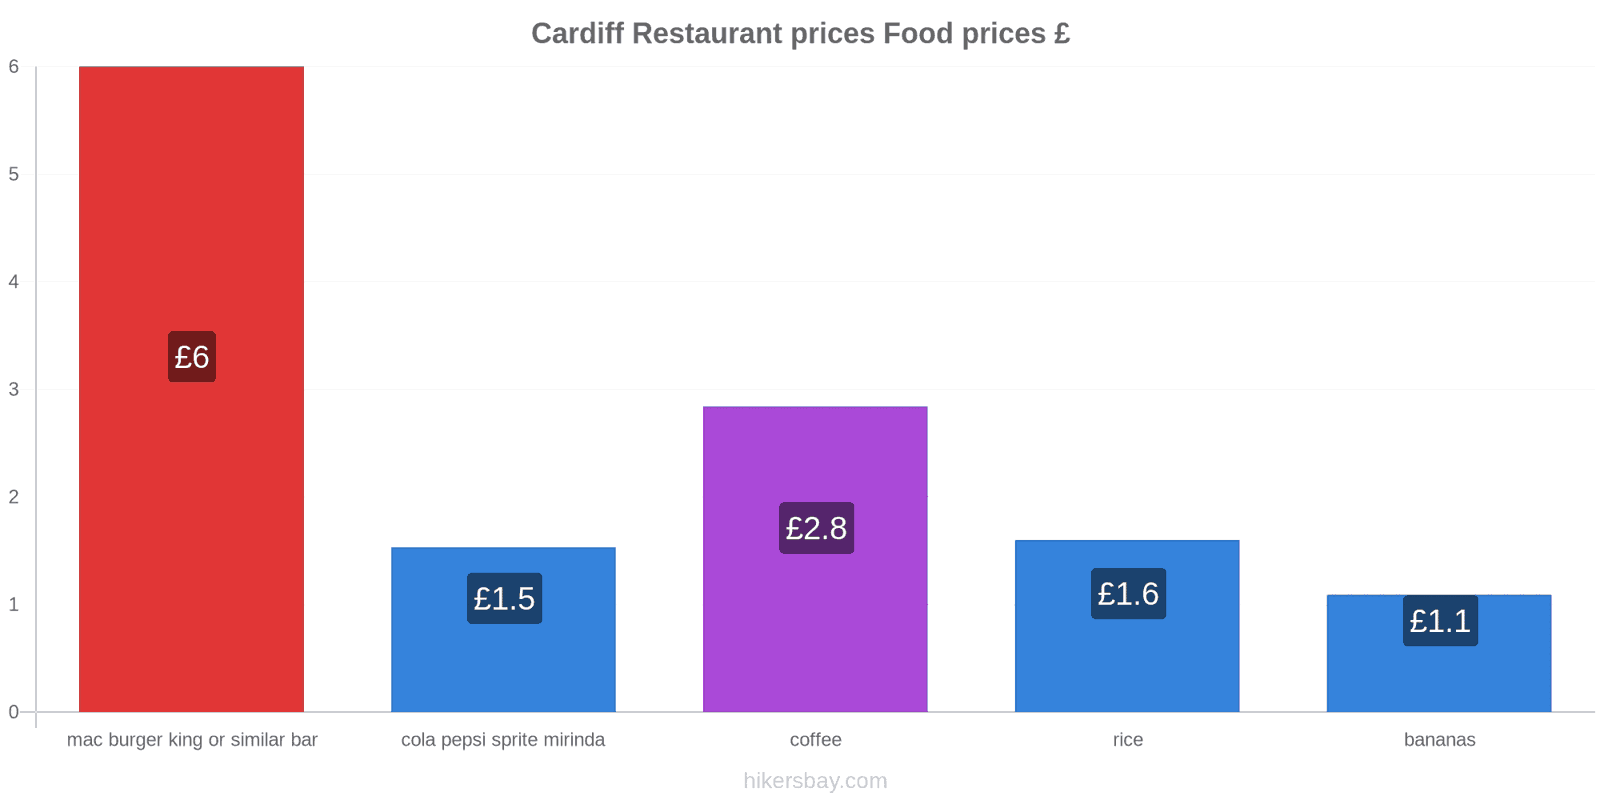 Cardiff price changes hikersbay.com